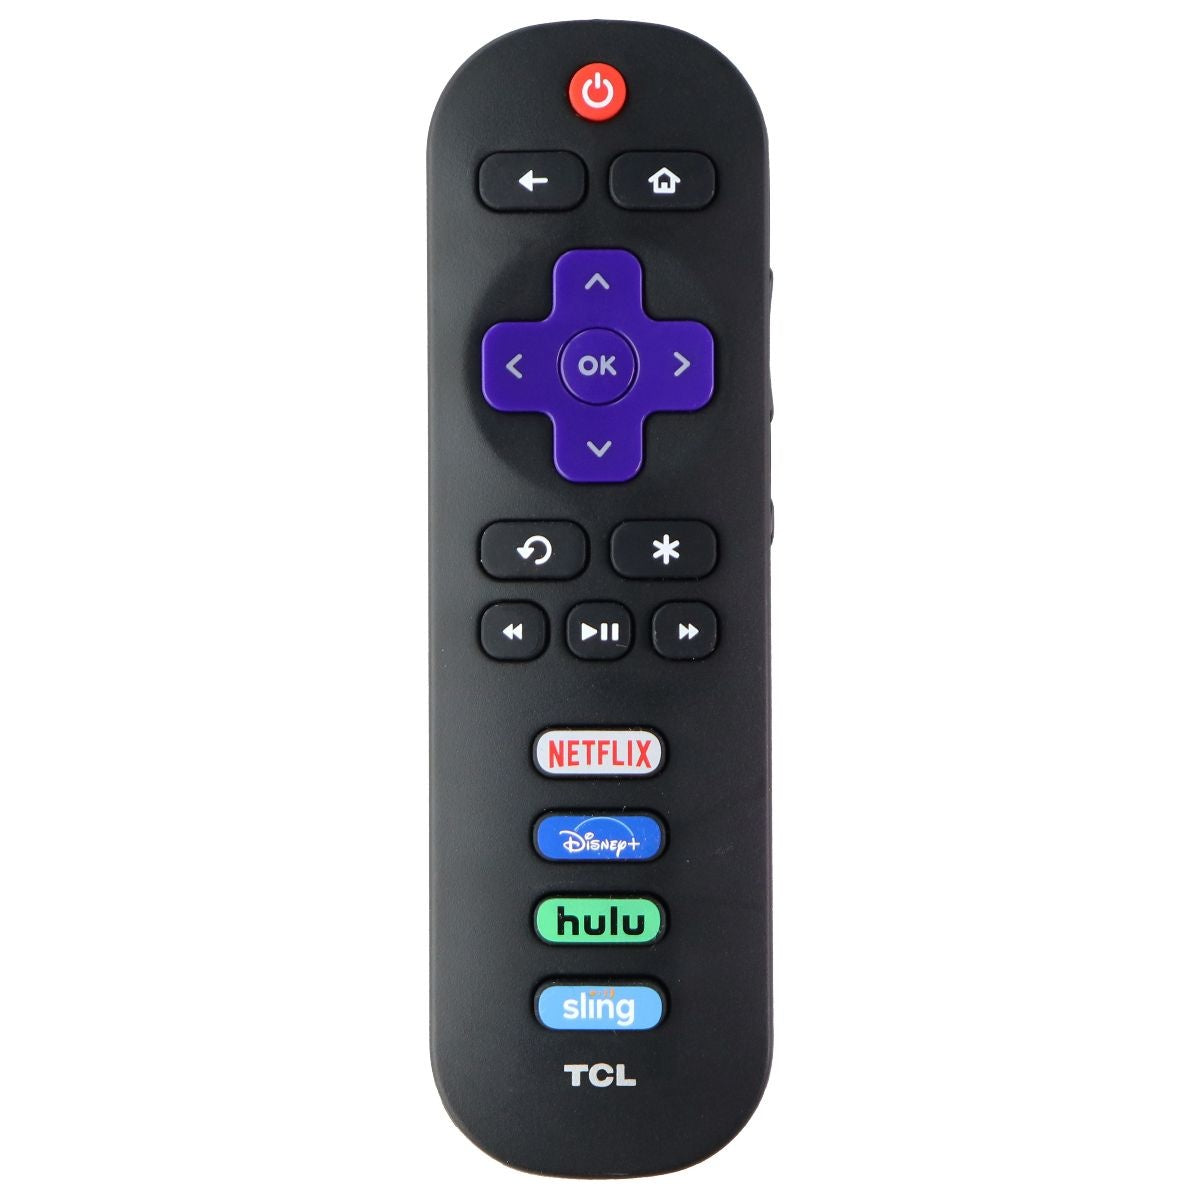 TCL Remote with Netflix/Disney/Hulu/Sling Keys for TCL TVs - Black